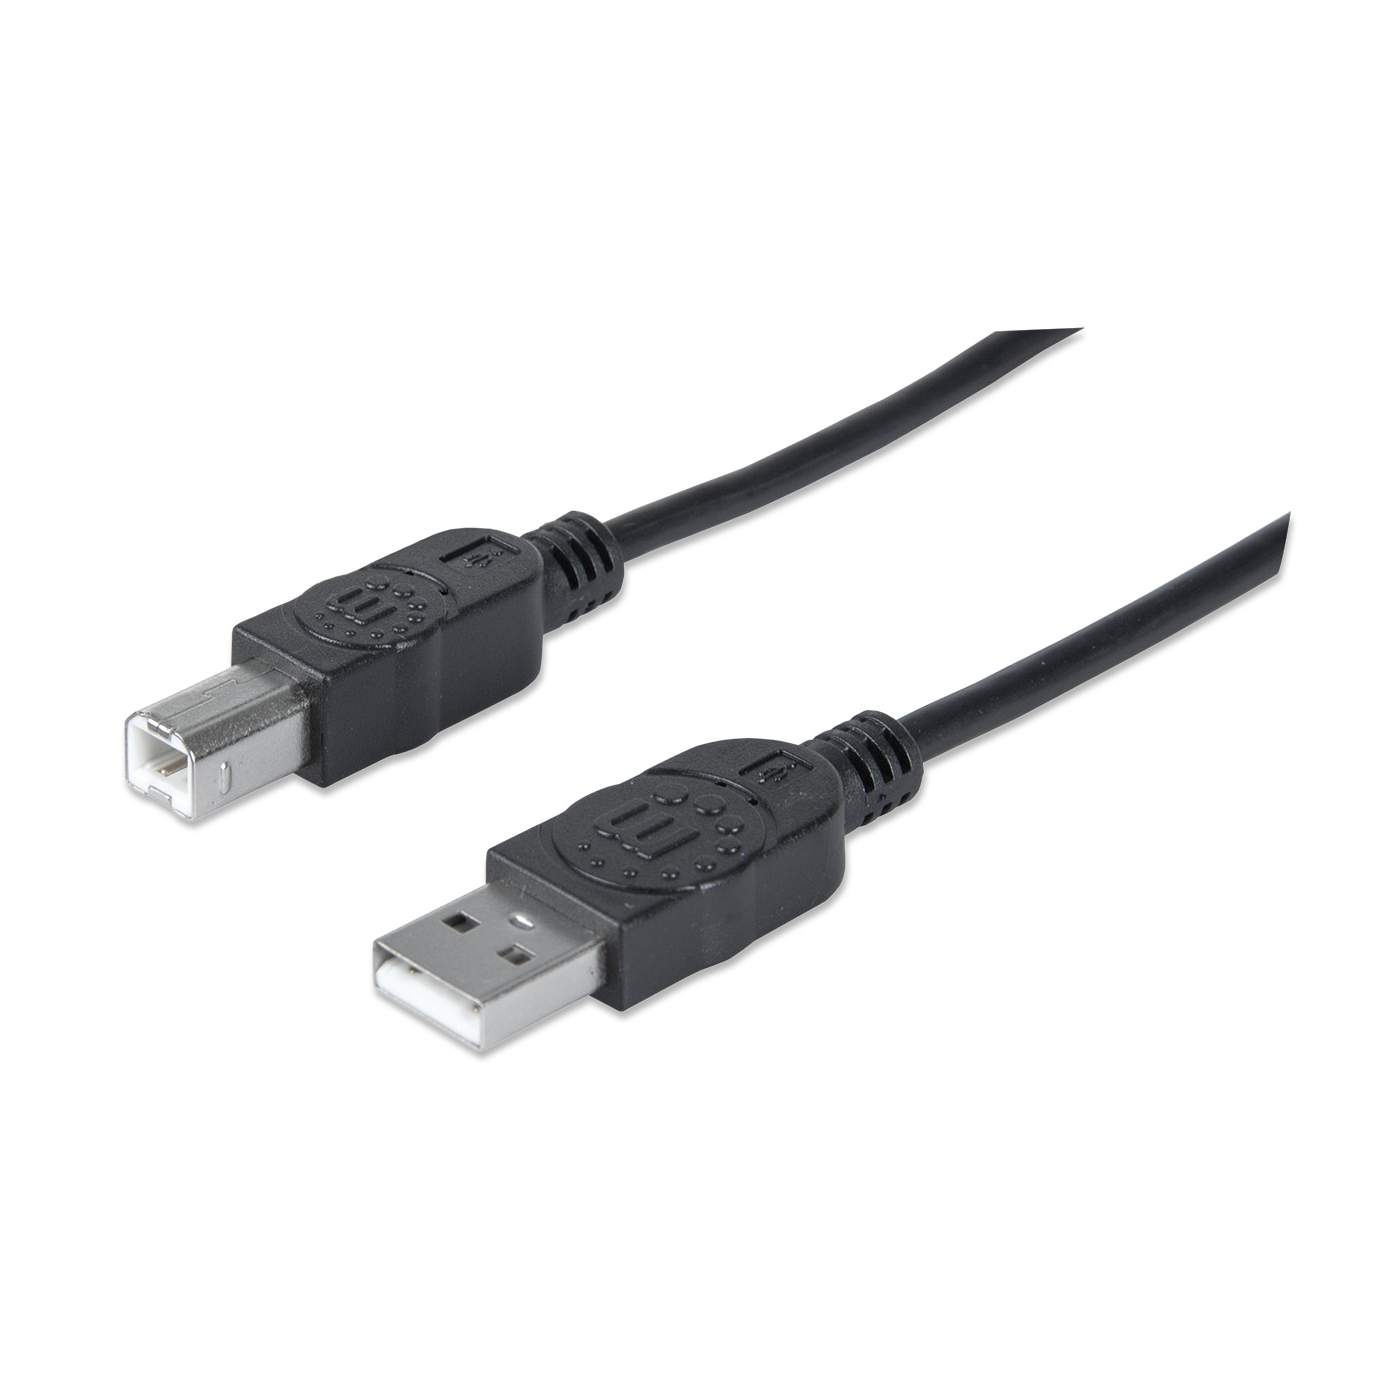 Line 6 CBL USB HIGH SPEED 2M câble USB-A vers USB-B